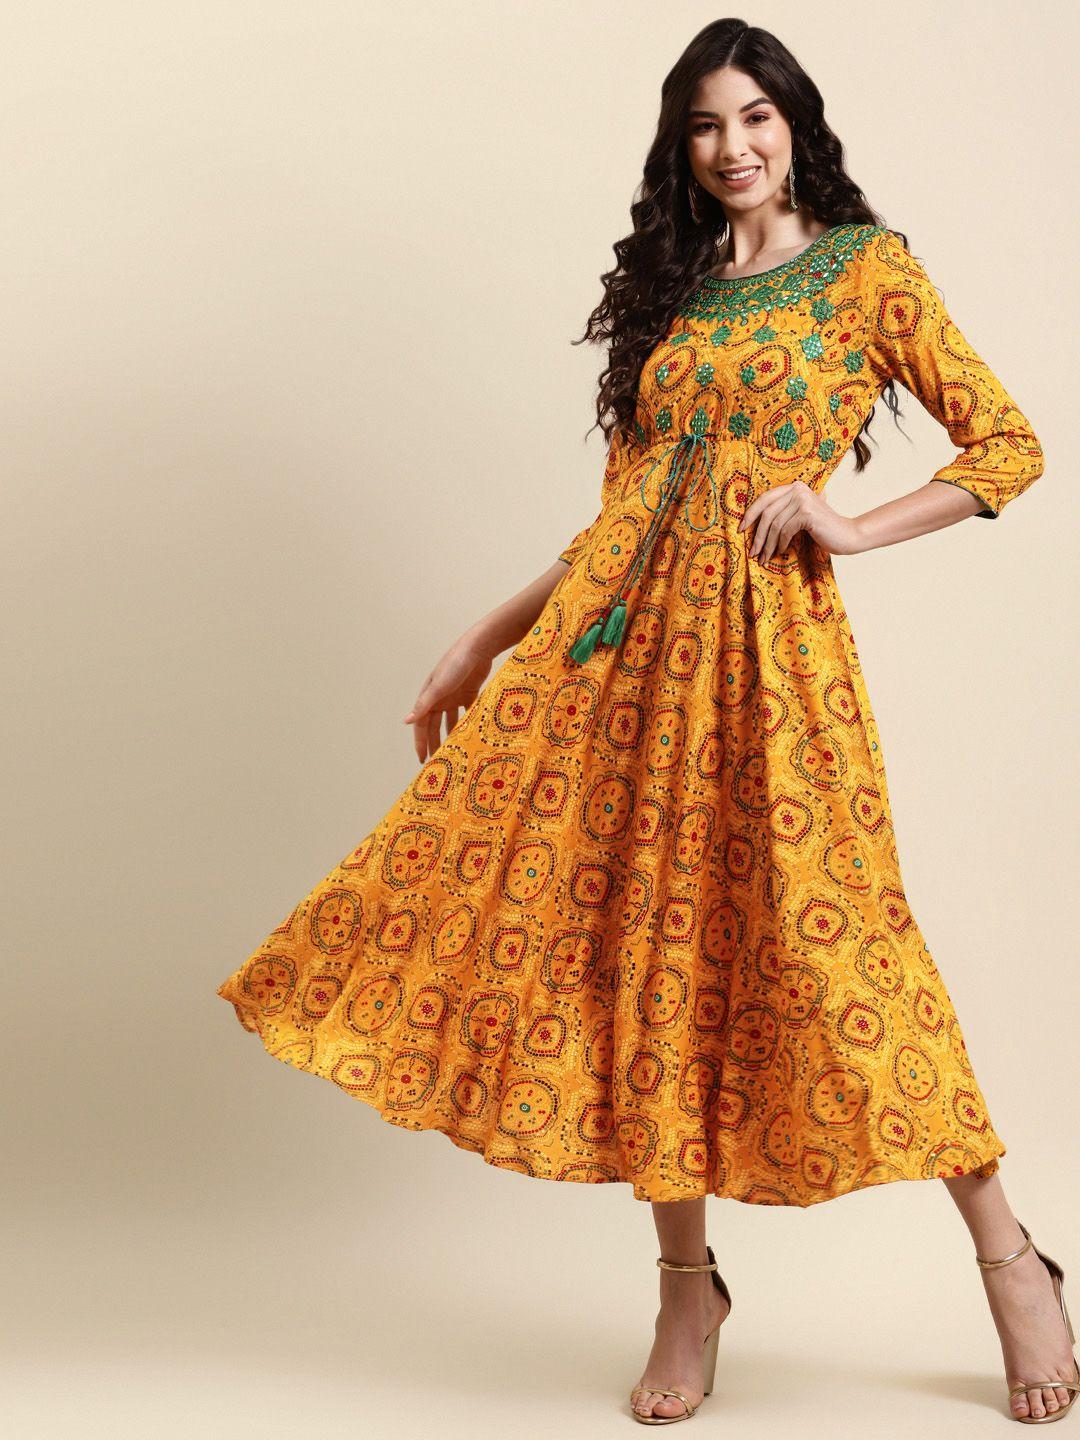 rangmayee mustard yellow & green ethnic motifs ethnic a-line midi dress